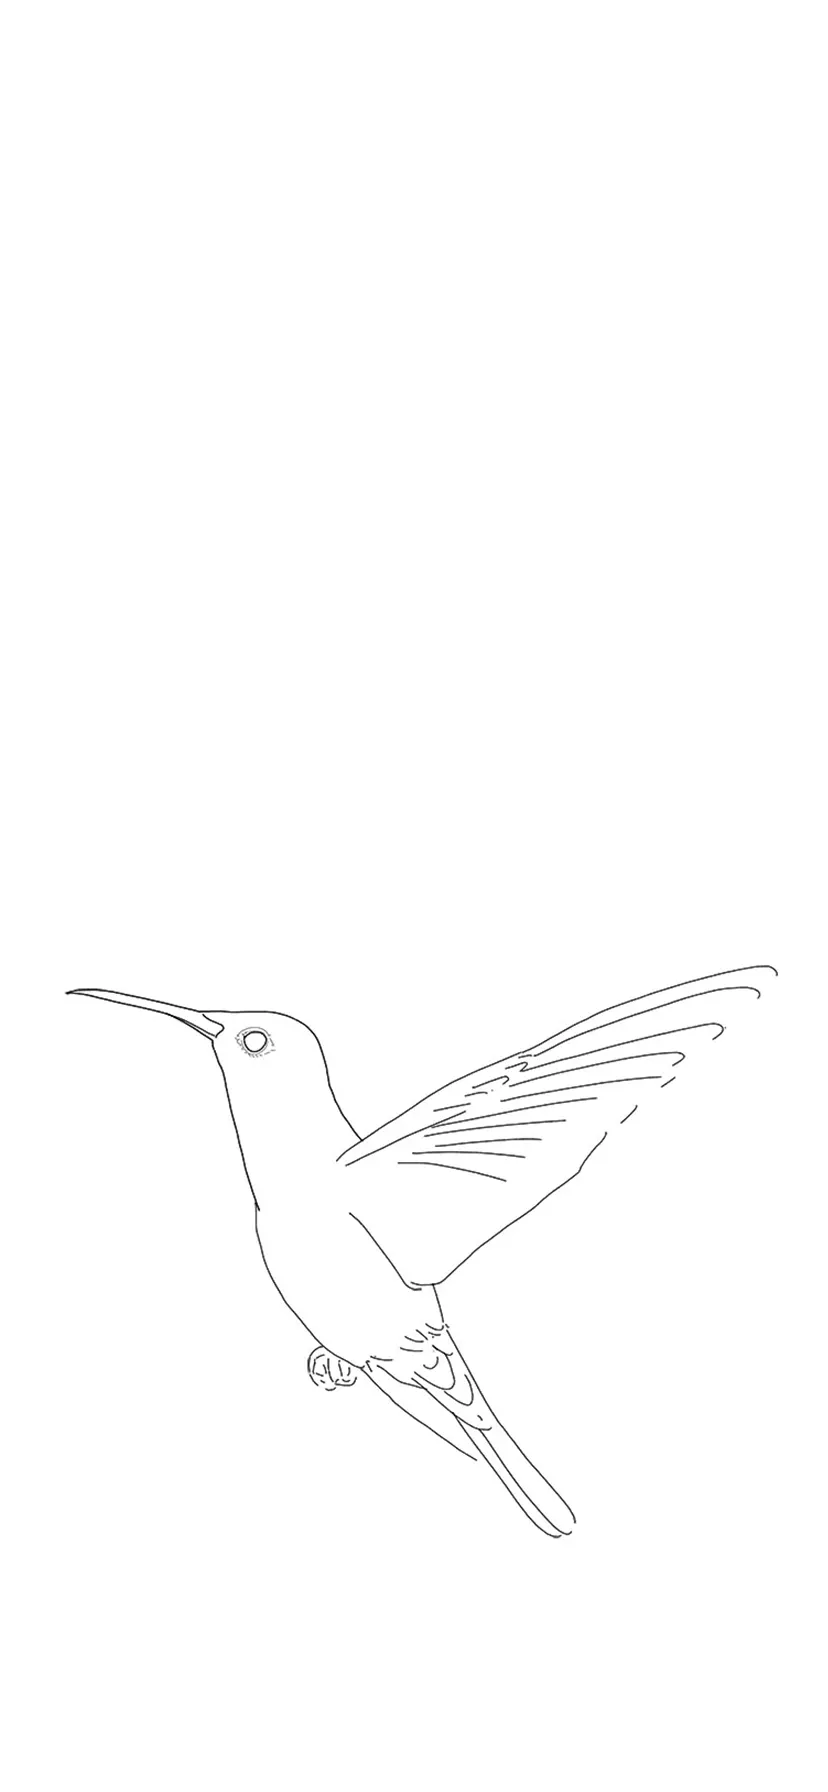 Set hummingbirds sketch pencil drawing hand Vector Image